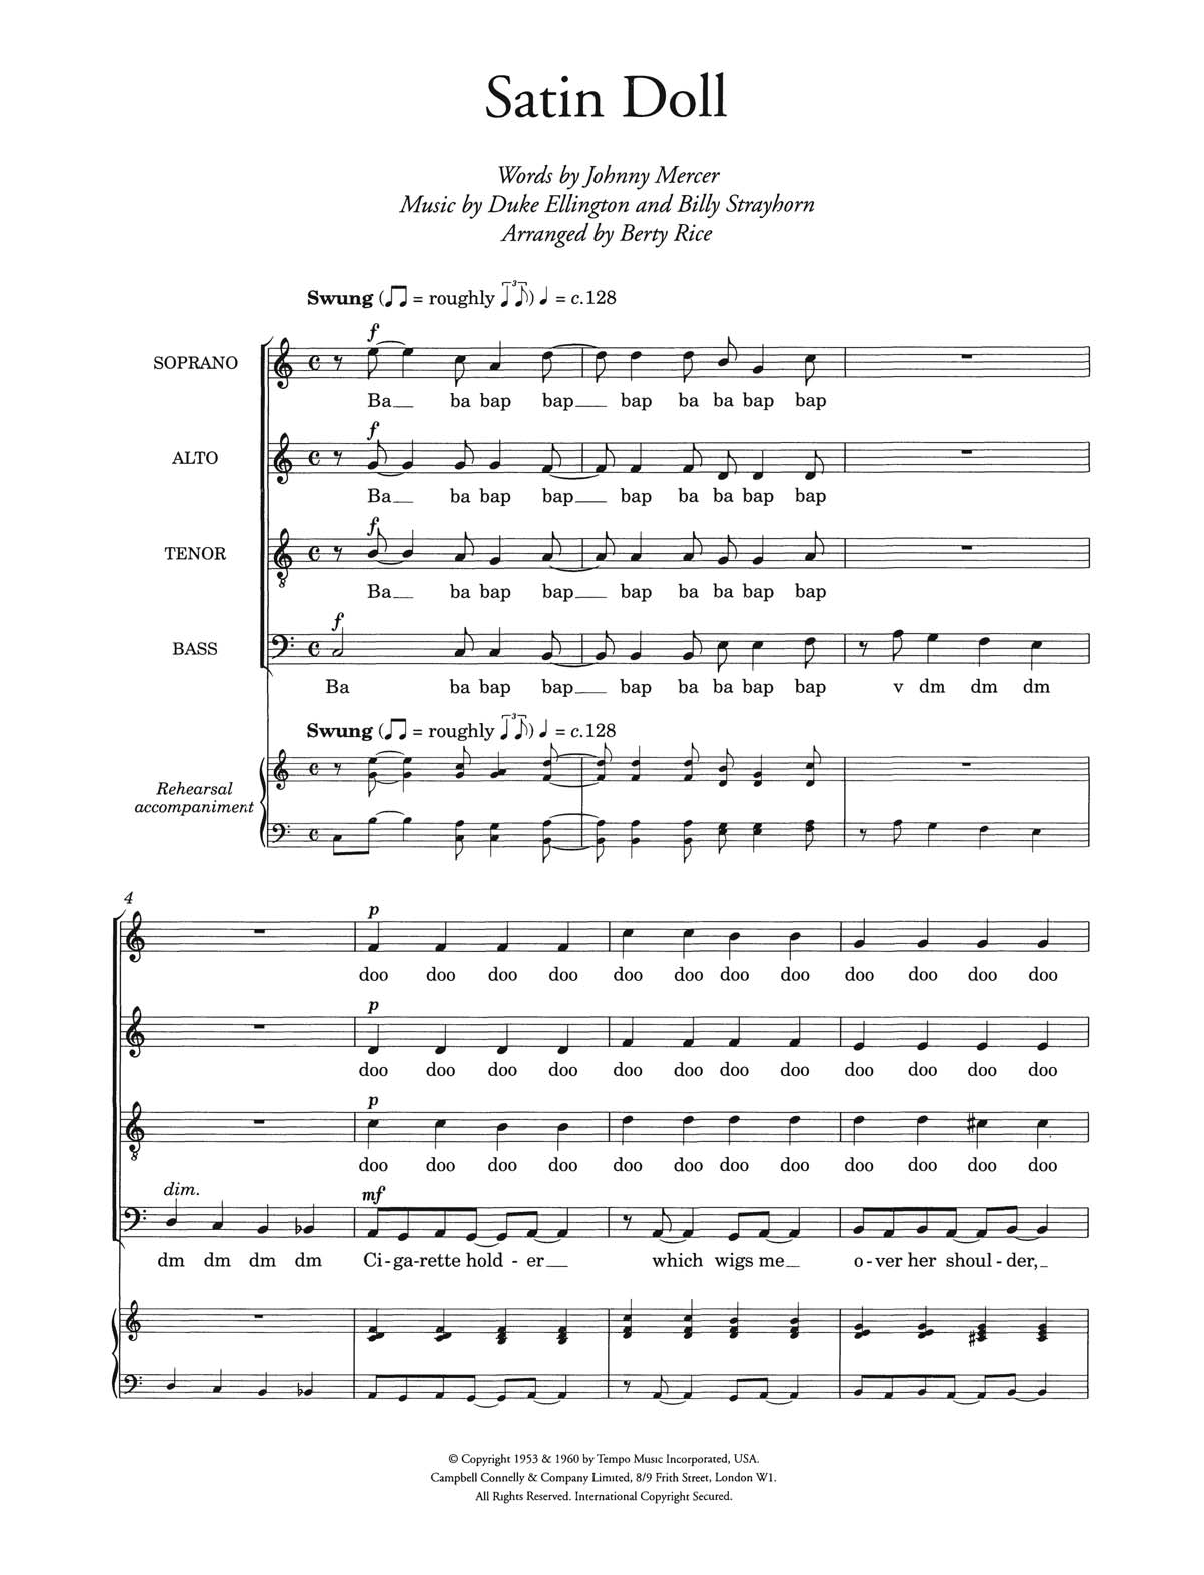 Duke Ellington Satin Doll (arr. Berty Rice) Sheet Music Notes & Chords for Choir - Download or Print PDF